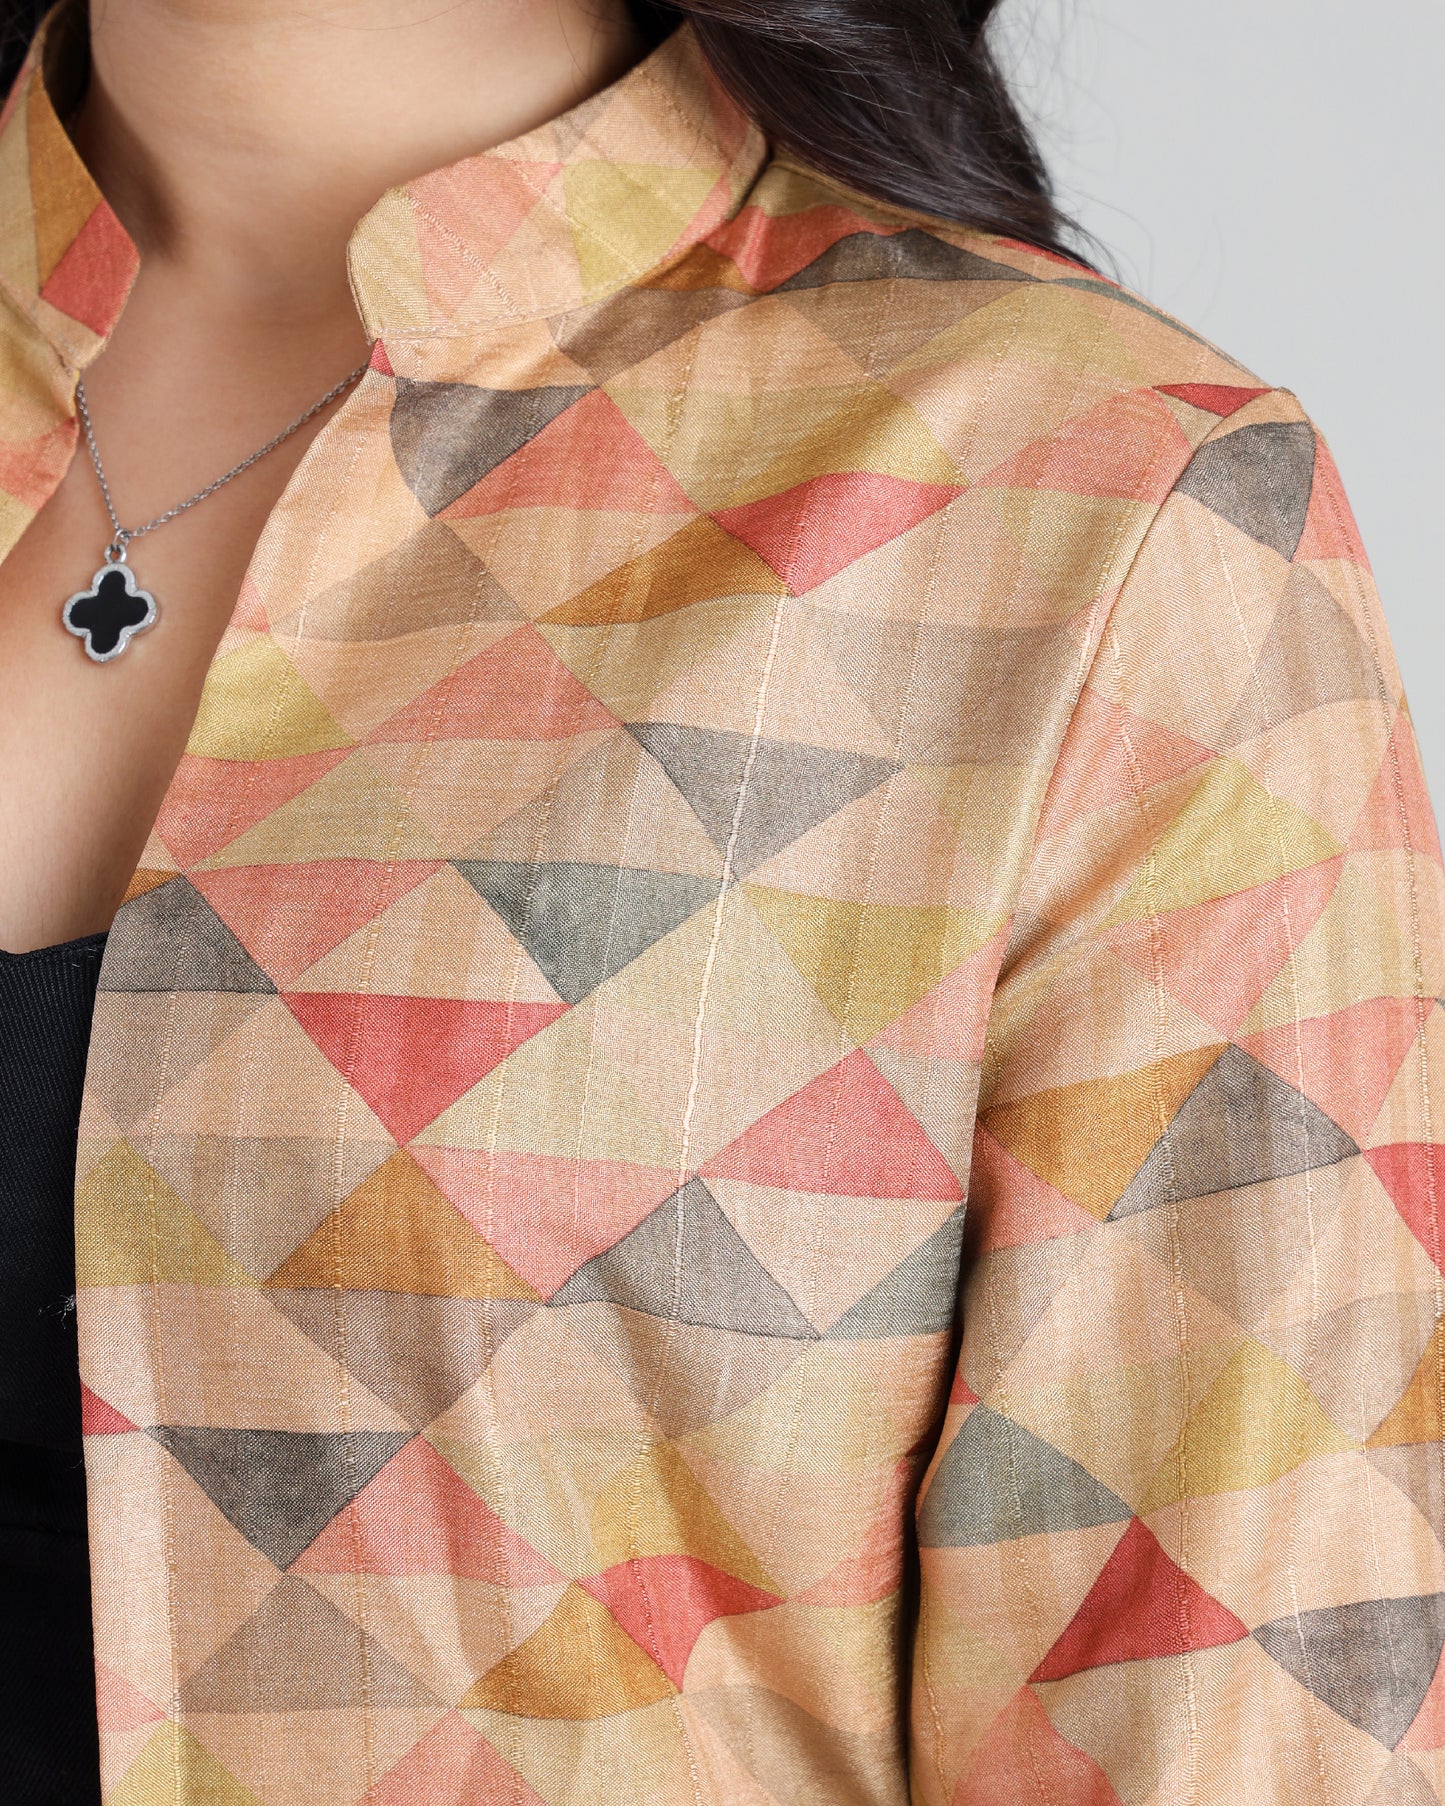 Striking Shapes : Women's Modern Geometric Jacket